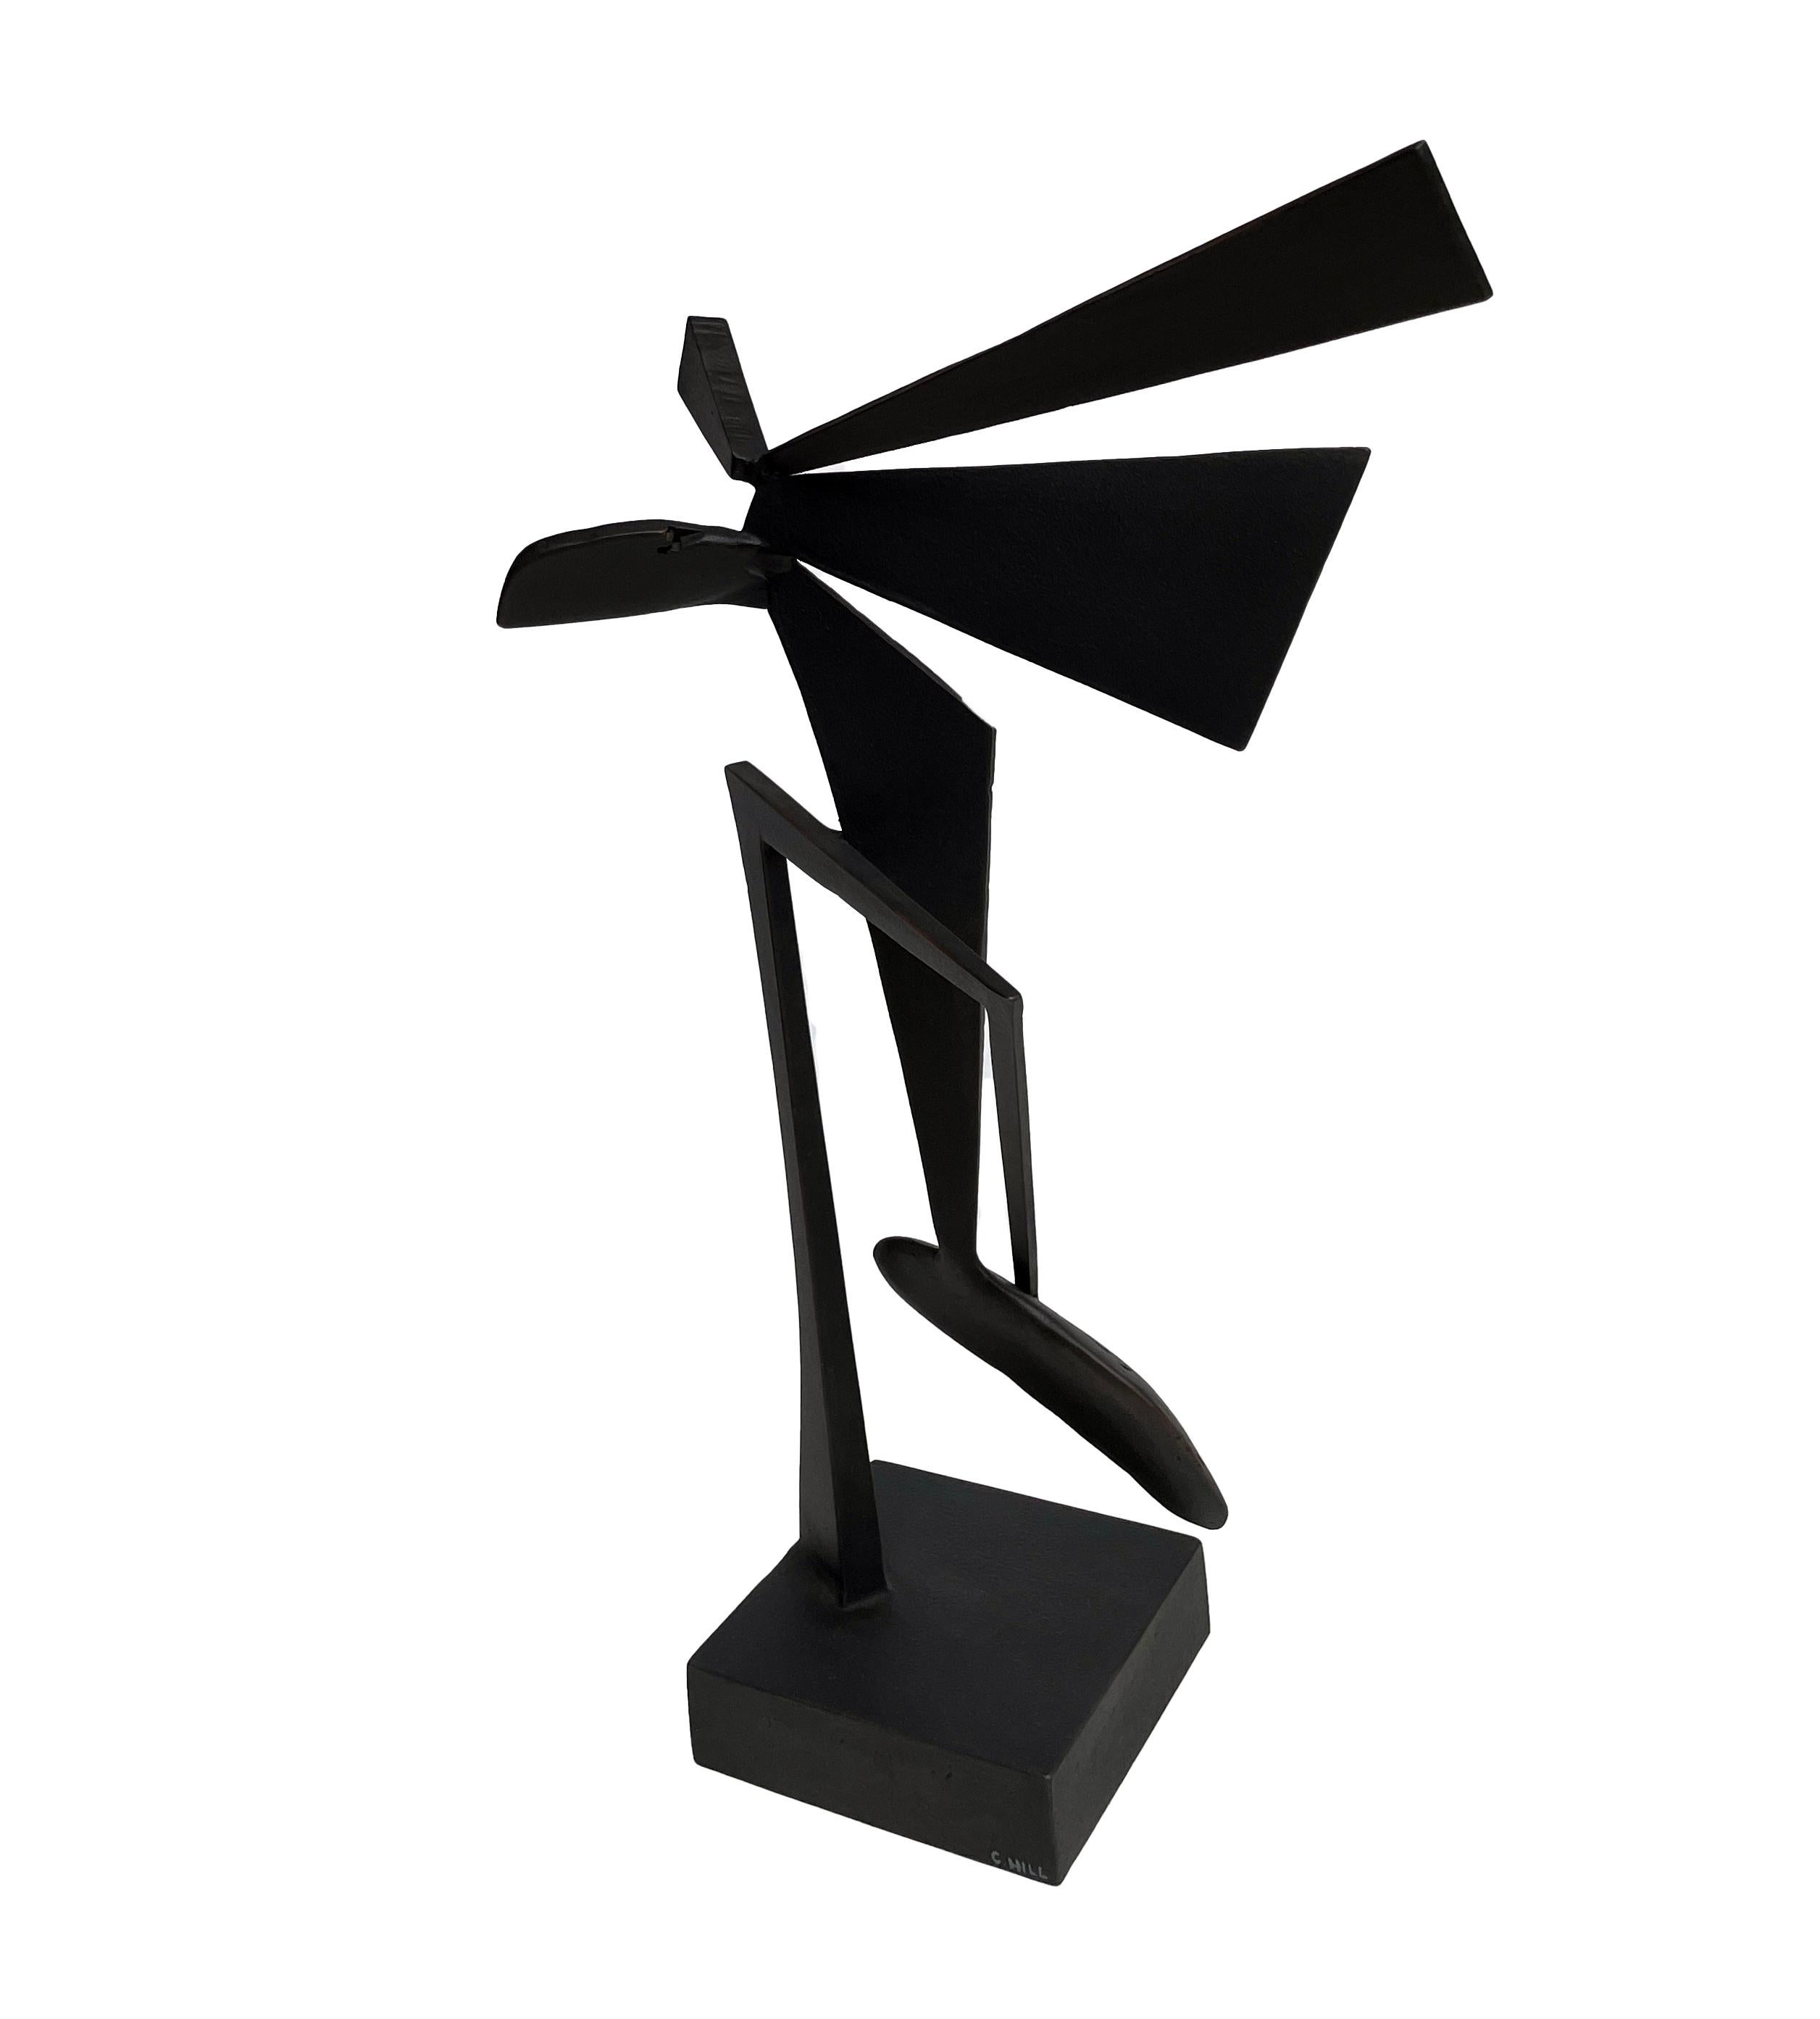  Looking Back - Black Abstract Geometric Form, Welded Steel Sculpture  2